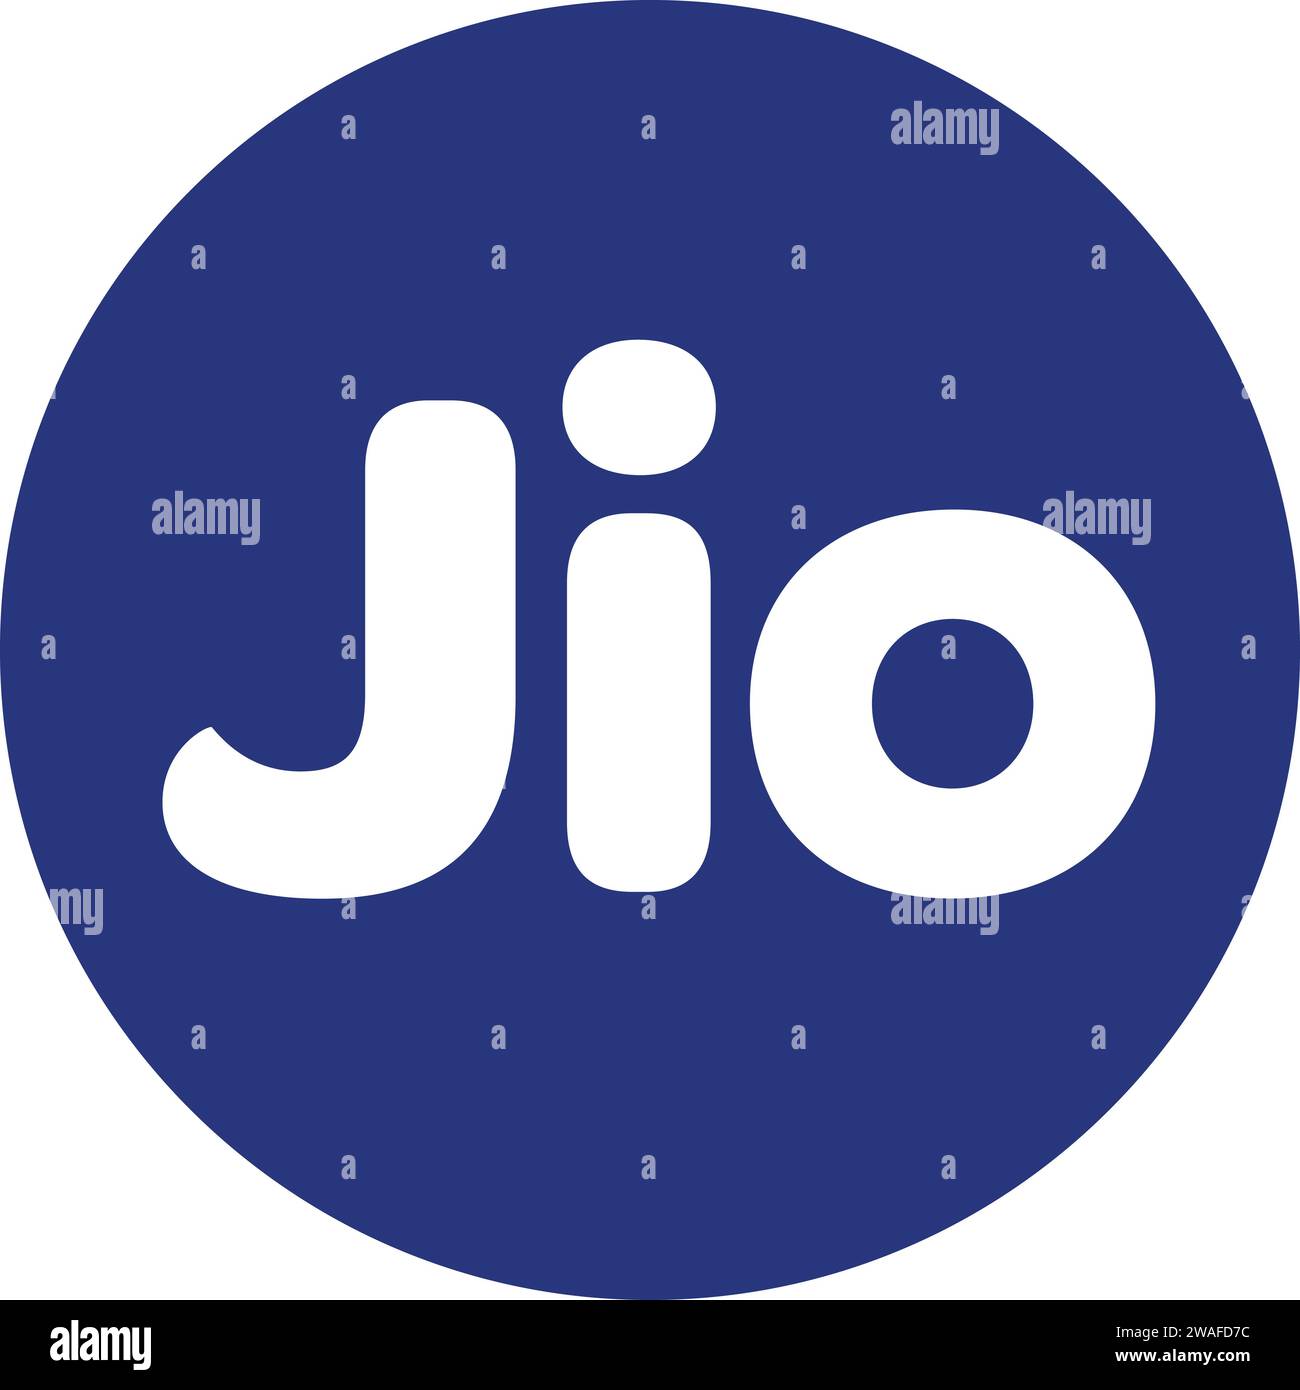 Reliance Jio Logo | jio Log Vektor Stock Vektor